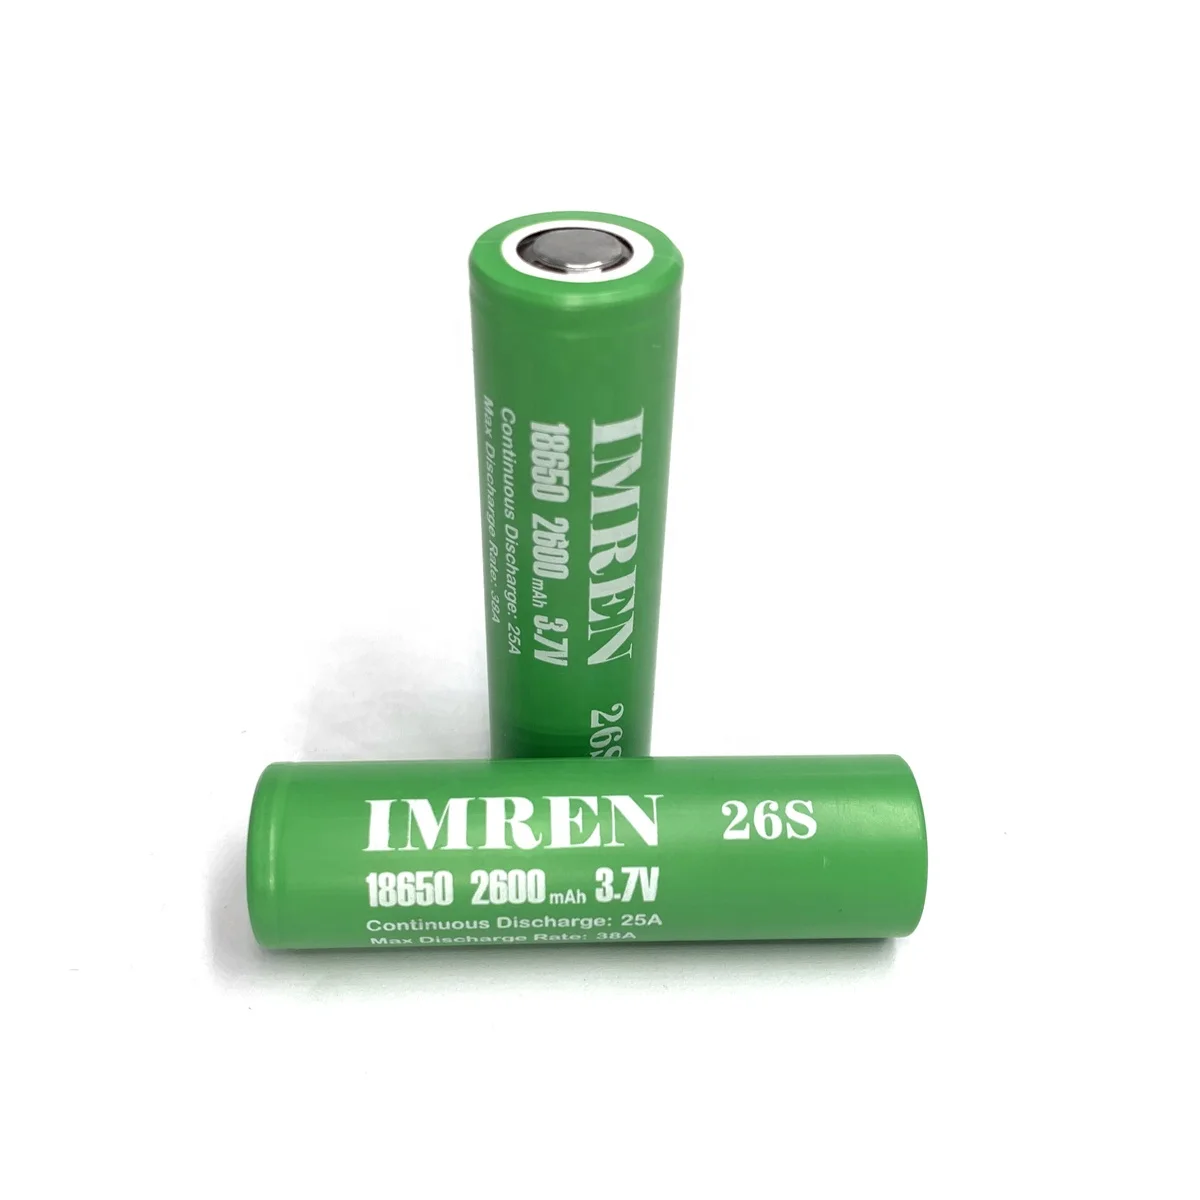 Rechargeable lithium battery IMREN 18650 2600mAh 26S 38a li-ion batteries solar hybrid power system 18650